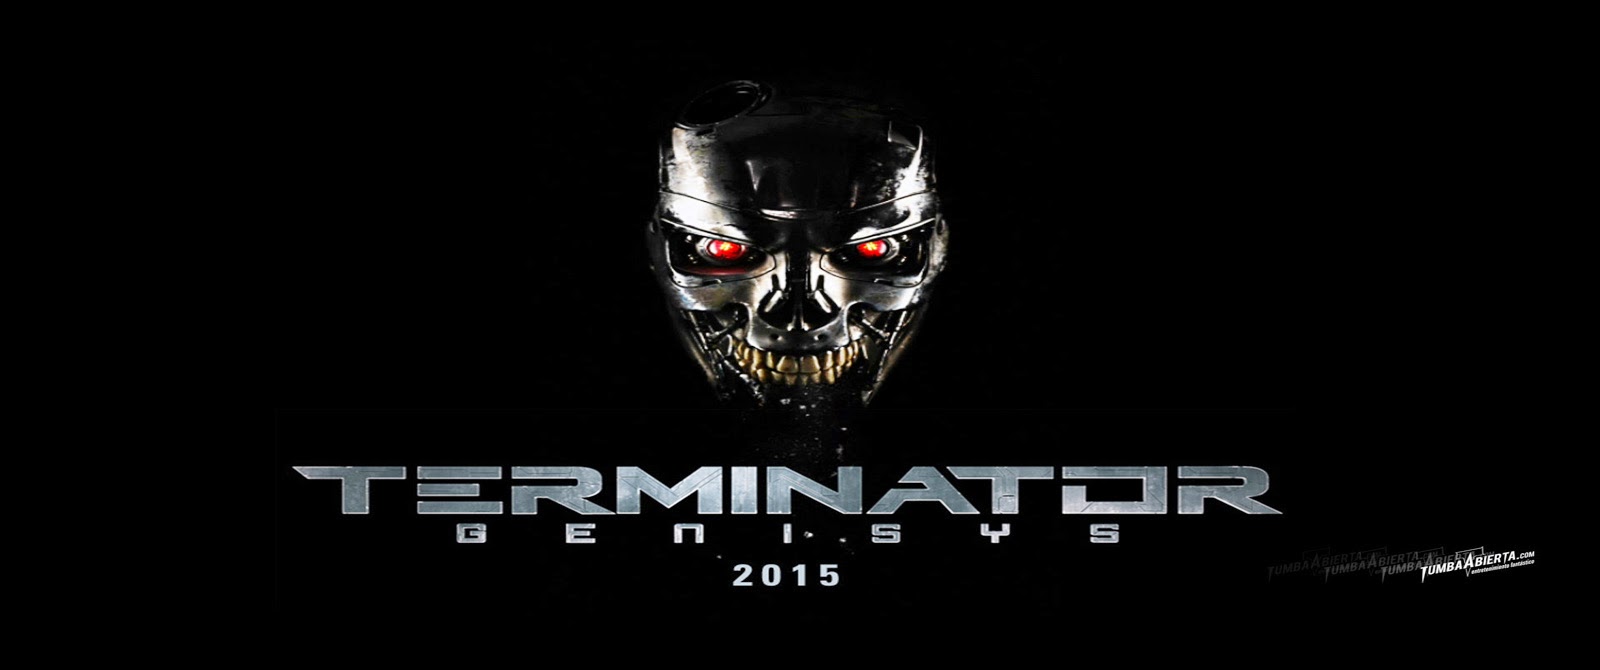 Download Terminator: Genisys Full Movie Free HD